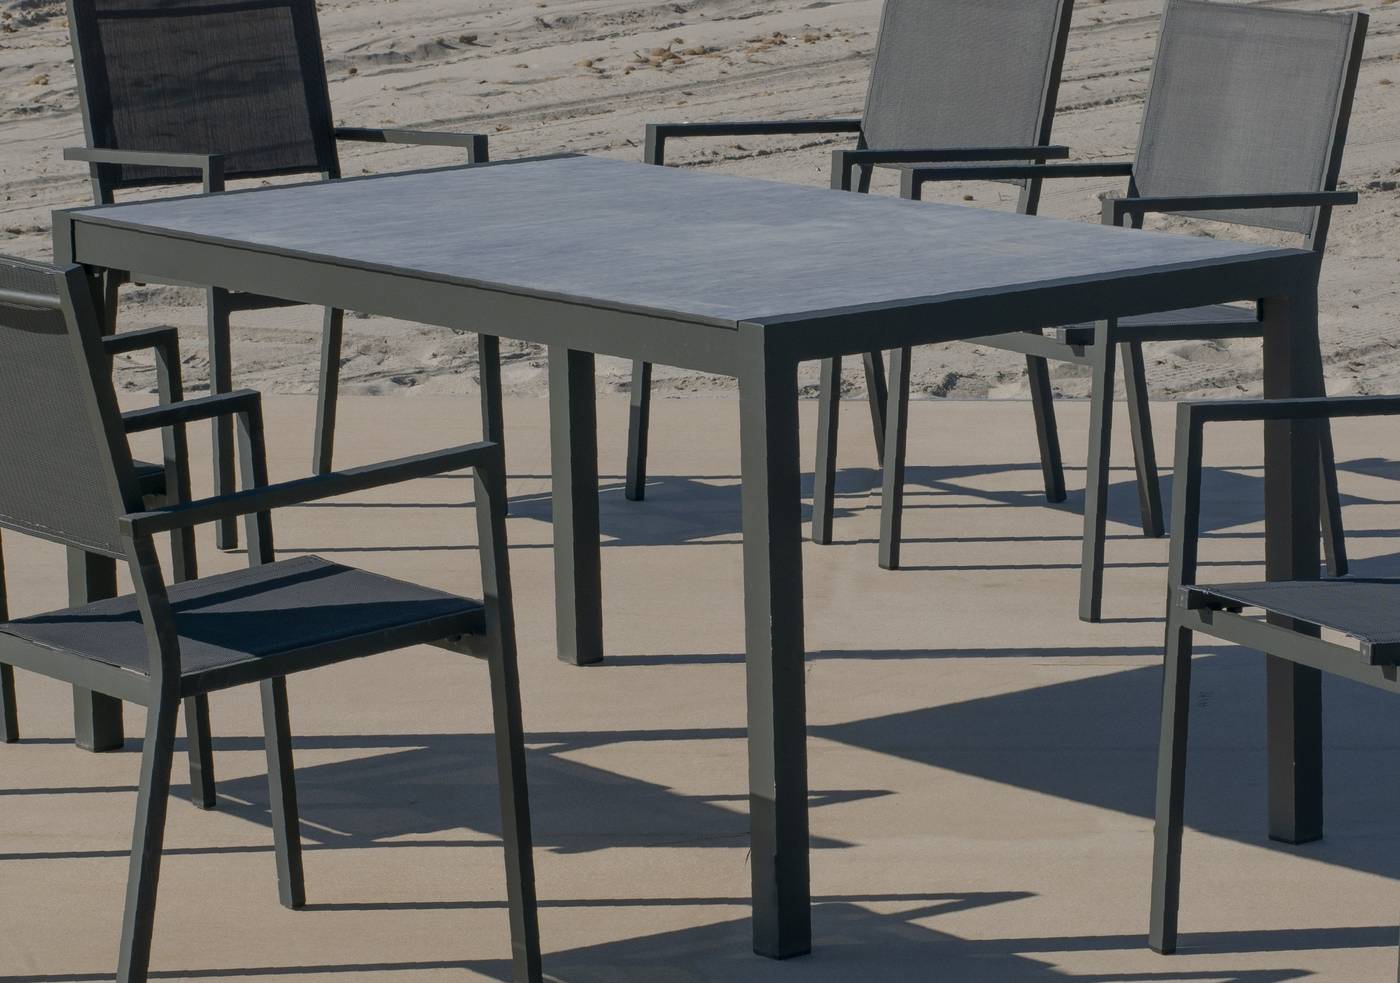 Set Córcega-160-6 Janeiro - Conjunto de aluminio para jardín: Mesa rectangular con tablero HPL de 160 cm + 6 sillones altos de textilen. Colores: blanco y antracita.